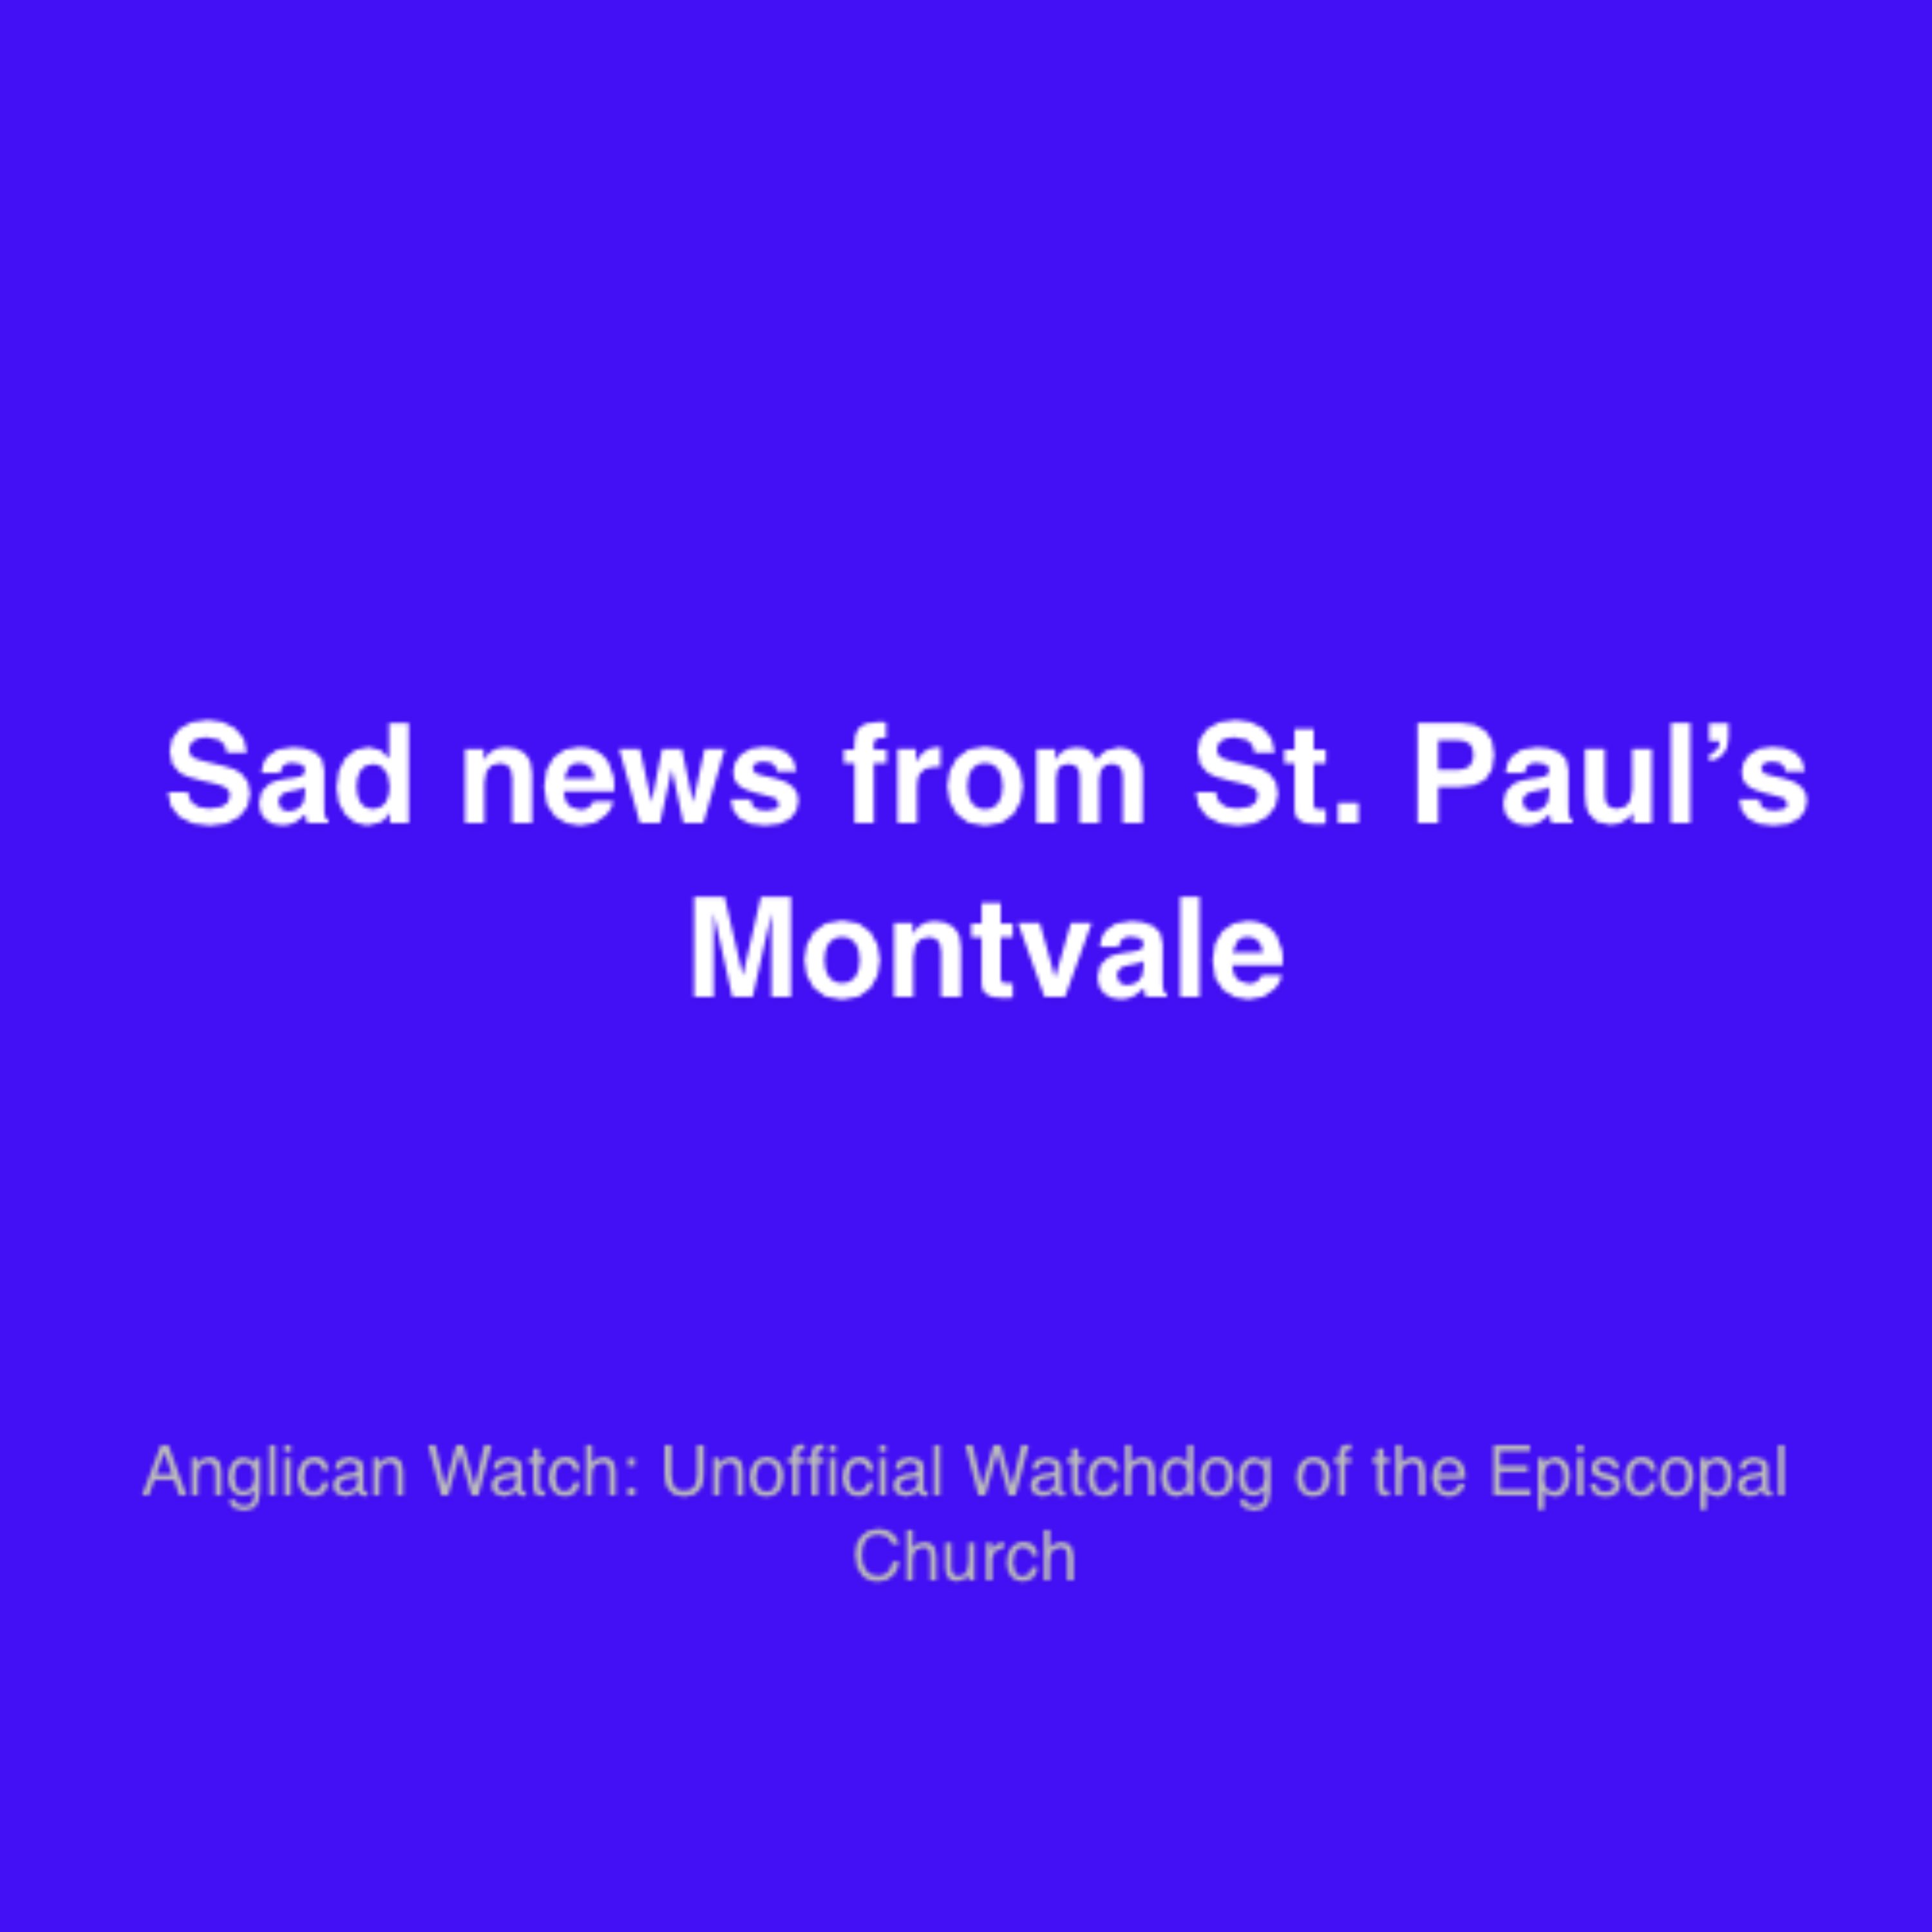 Sad news from St. Paul’s Montvale